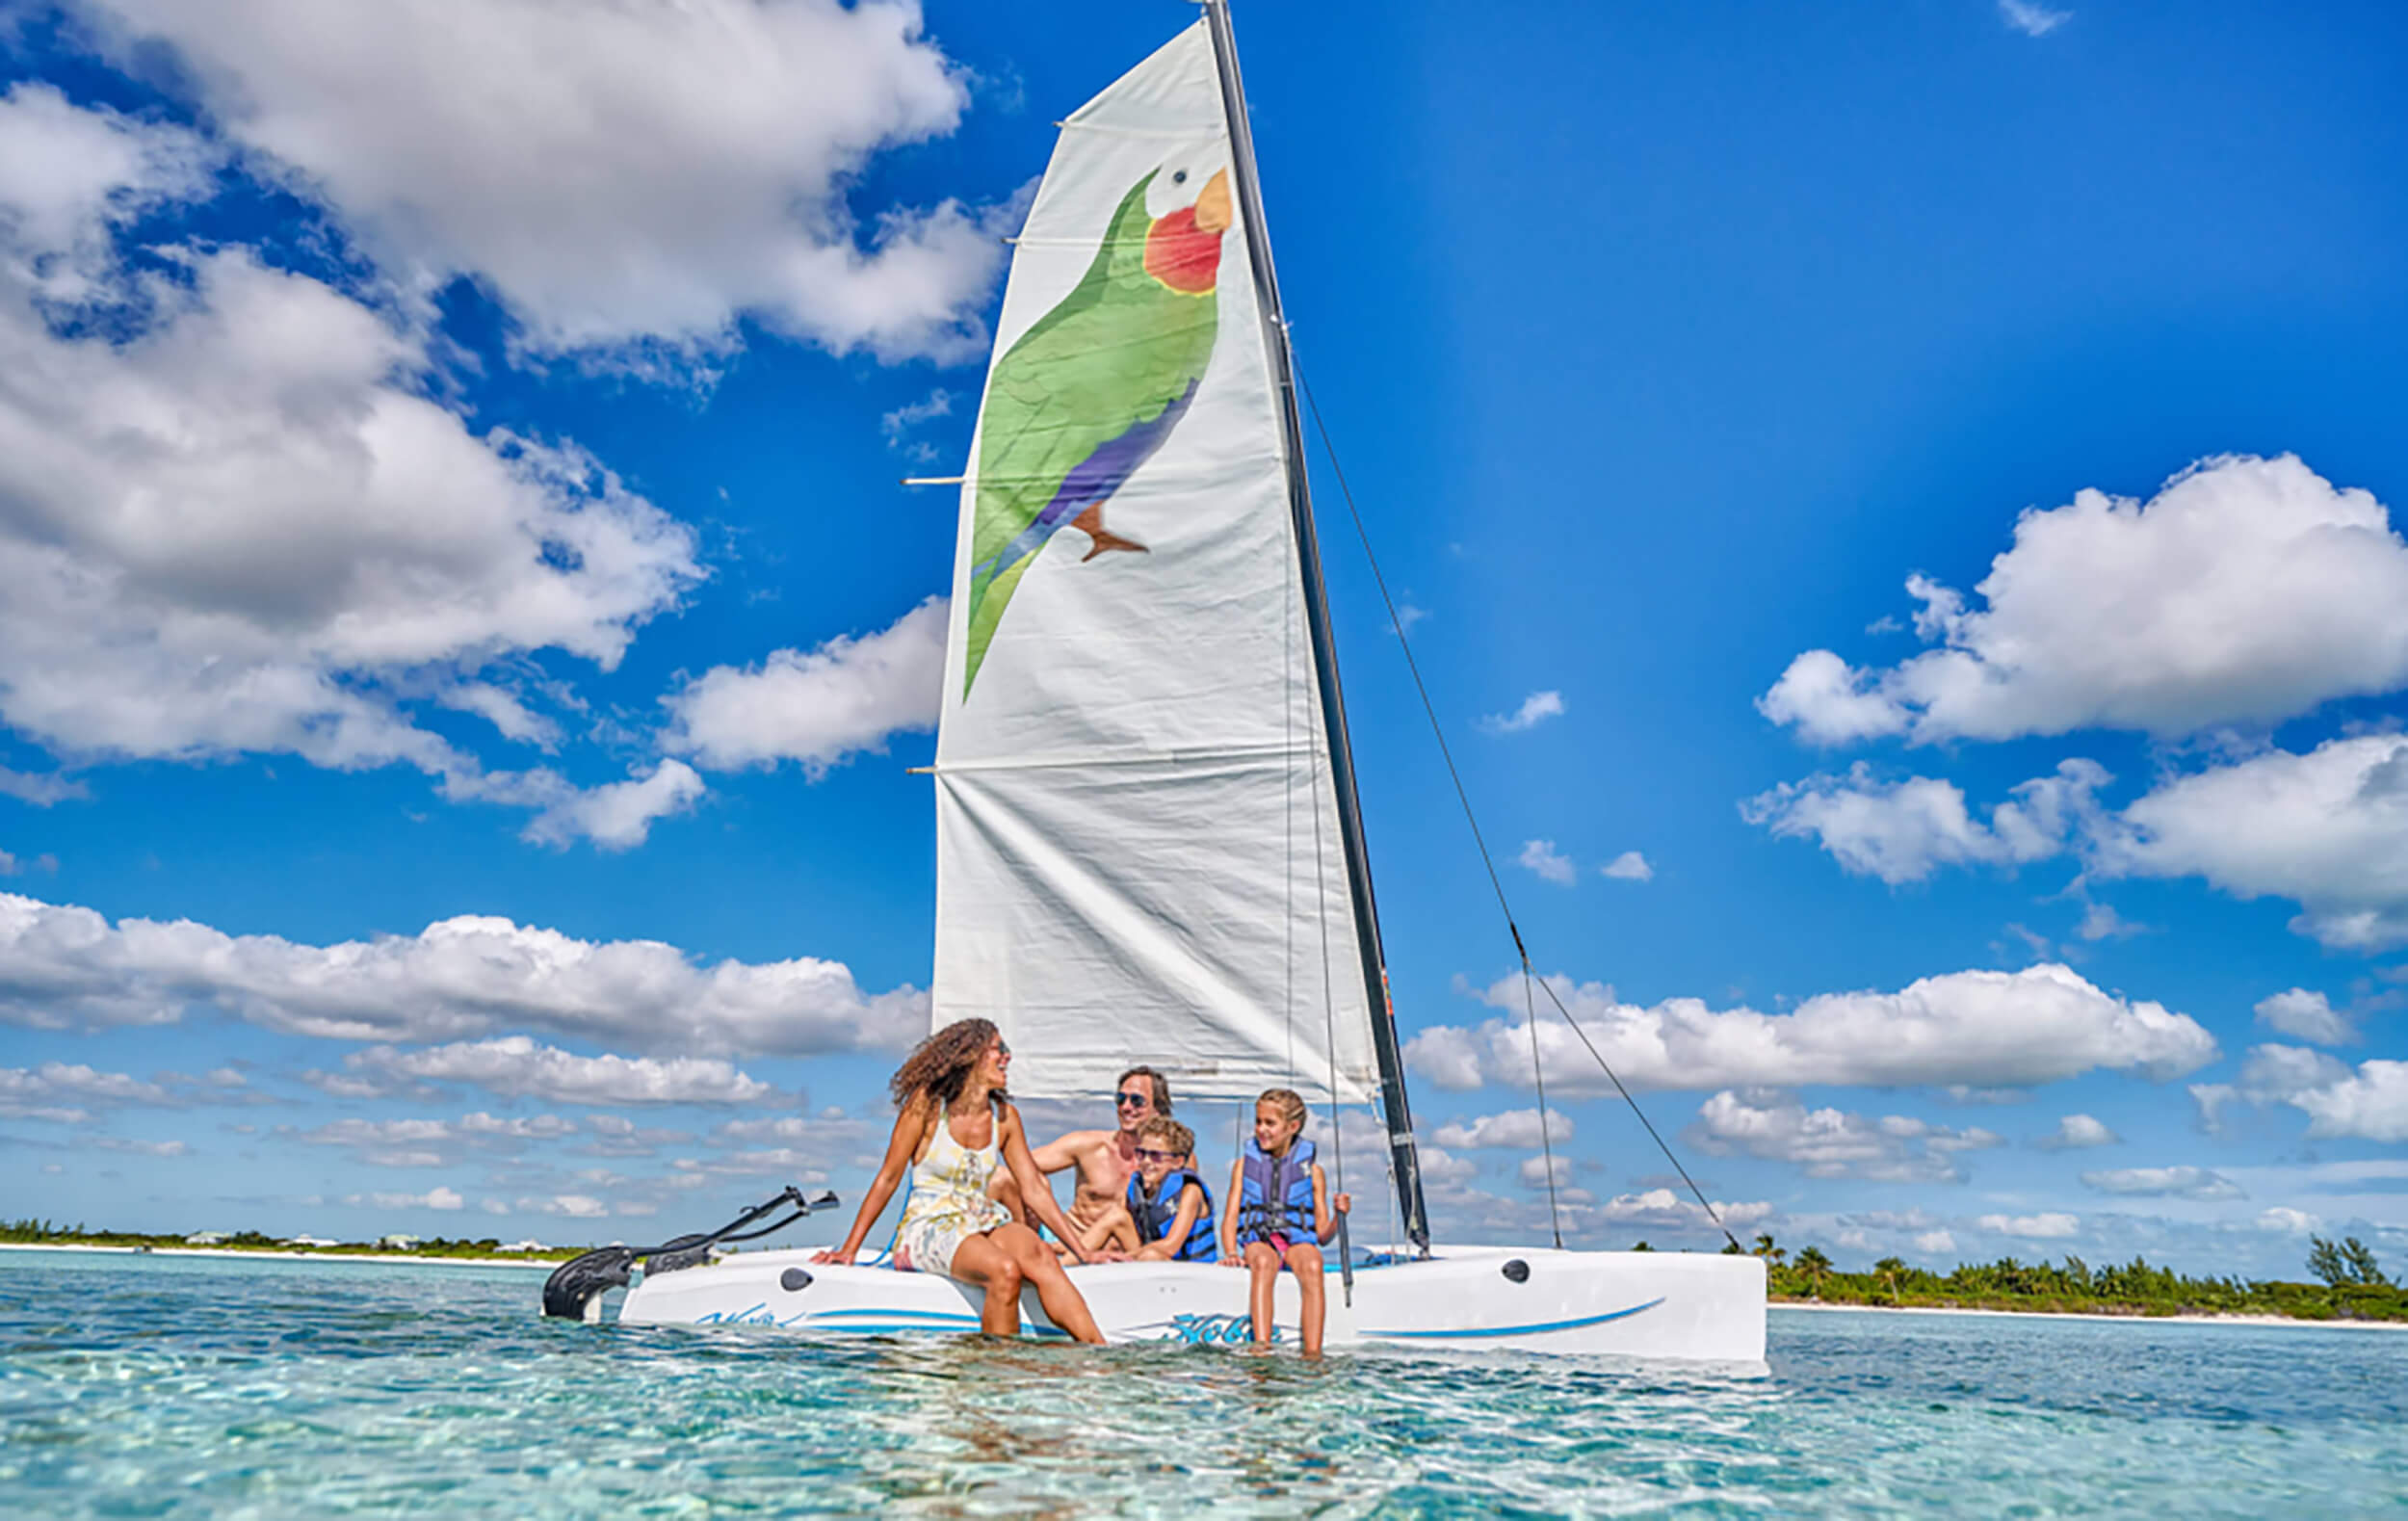 People on an Abaco Club sailboat enjoying coastal weather and lifestyle